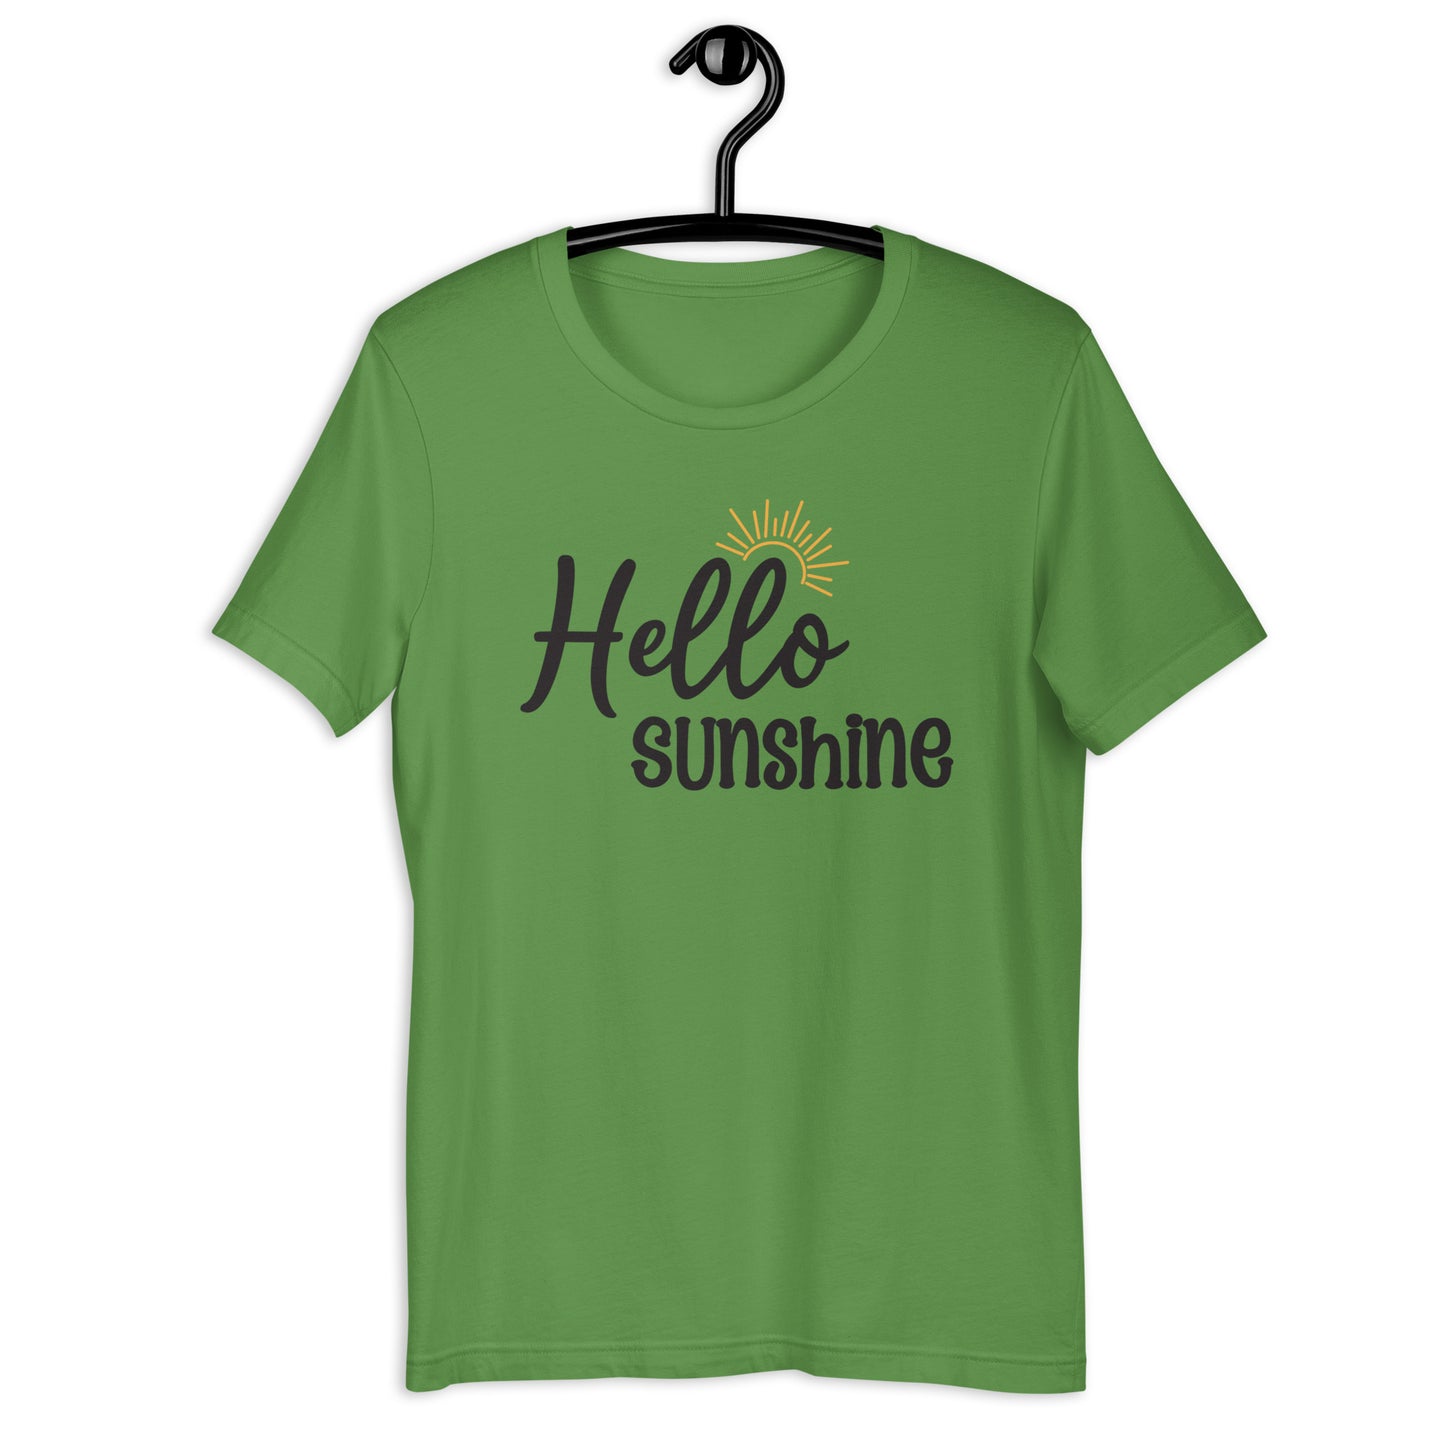 Hello Summer - Unisex t-shirt